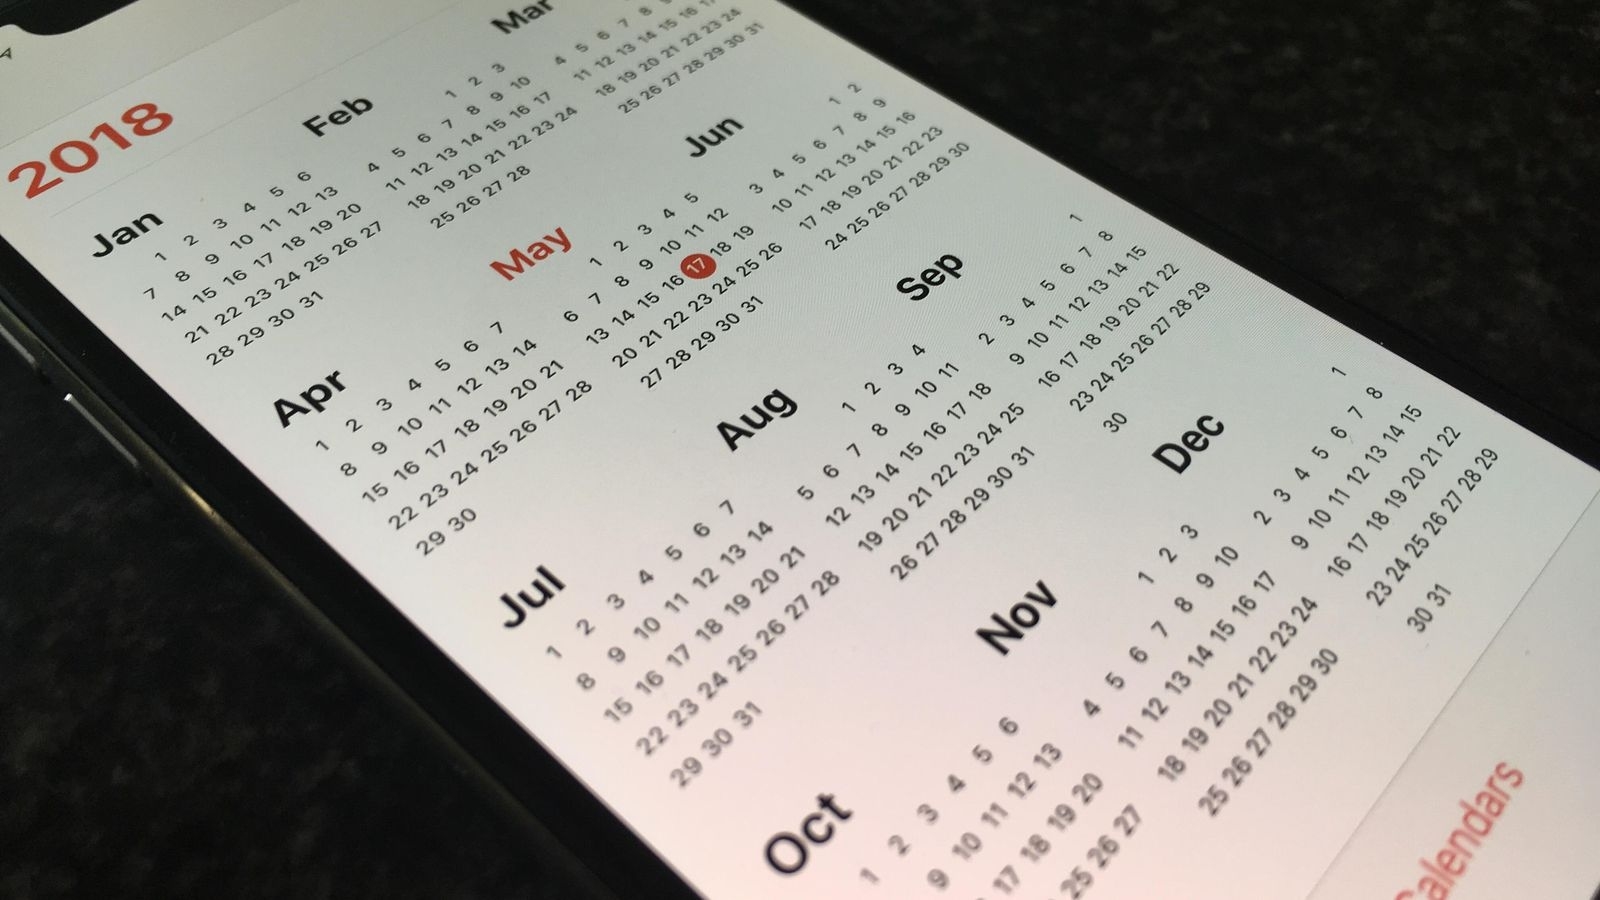 7 Iphone Calendar Tips Everyone Should Know - Cnet Iphone 5 Calendar Holidays